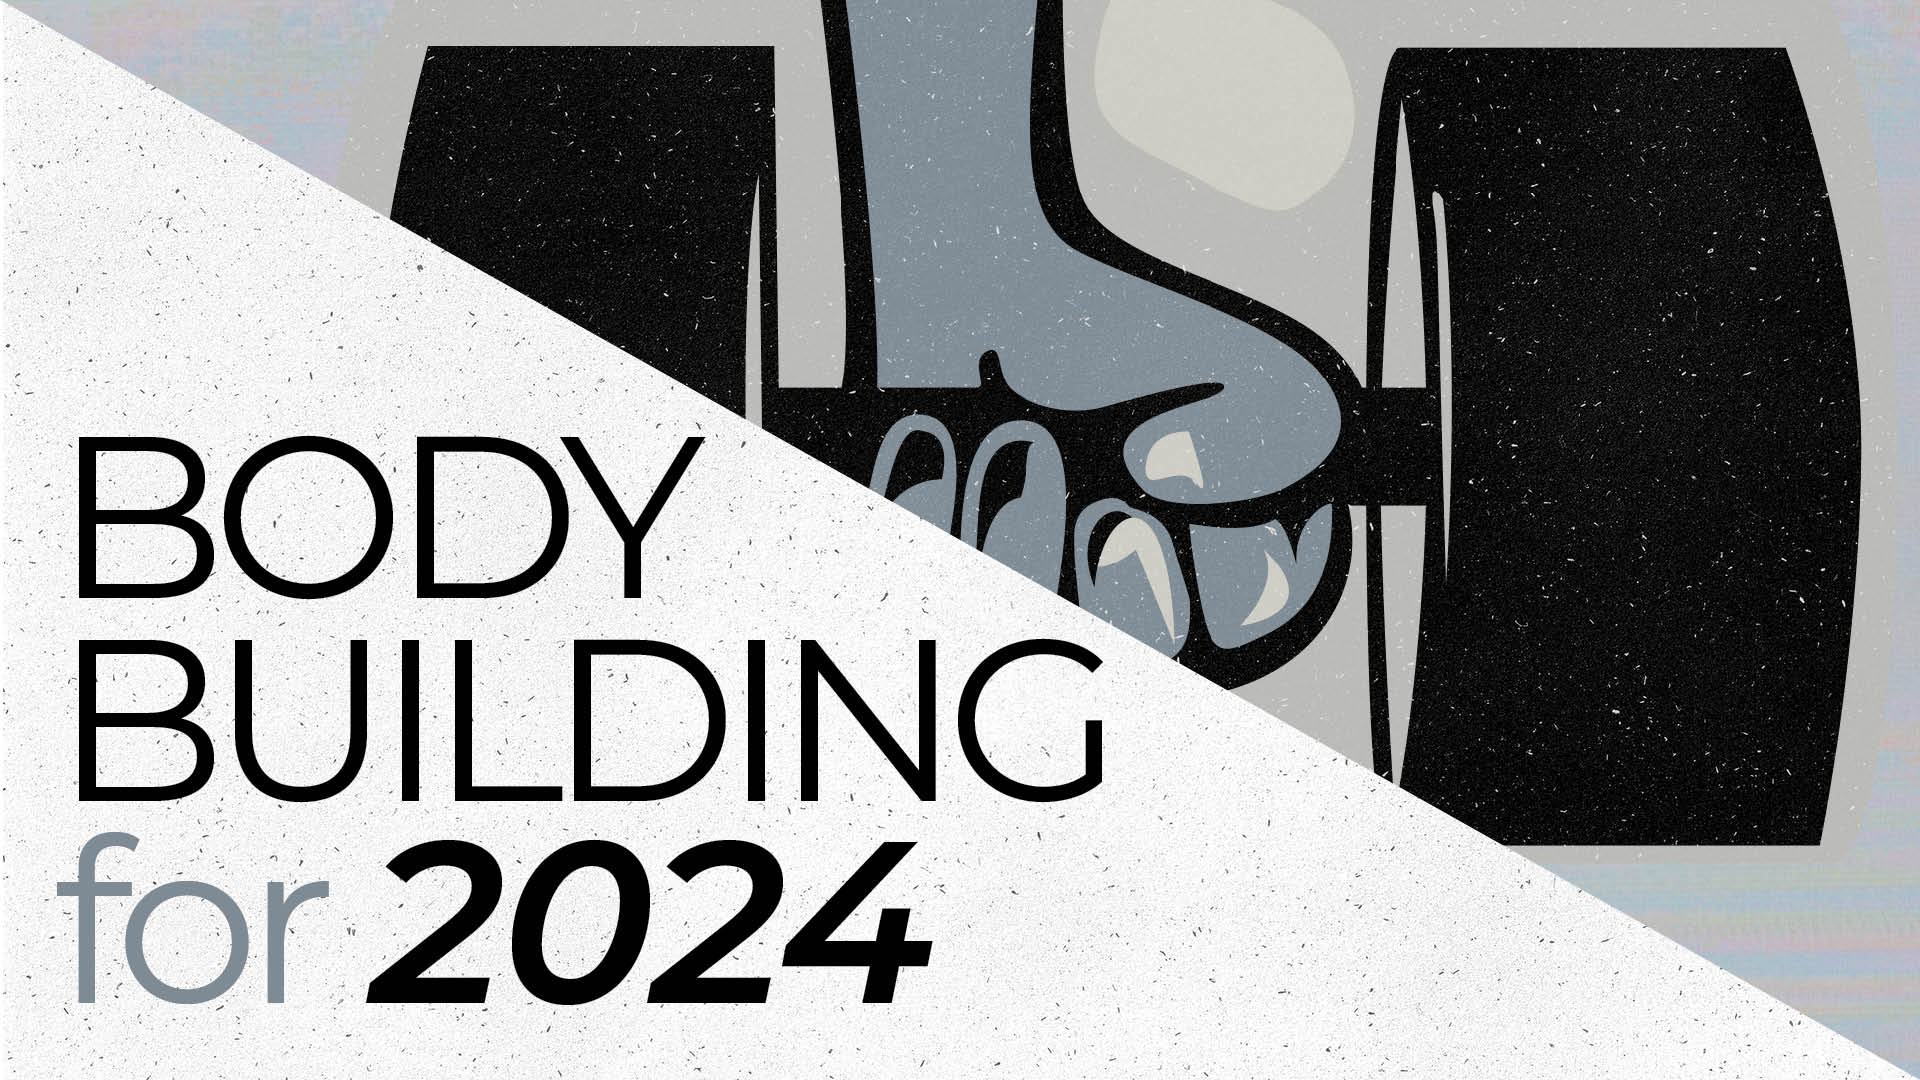 Bodybuilding for 2024